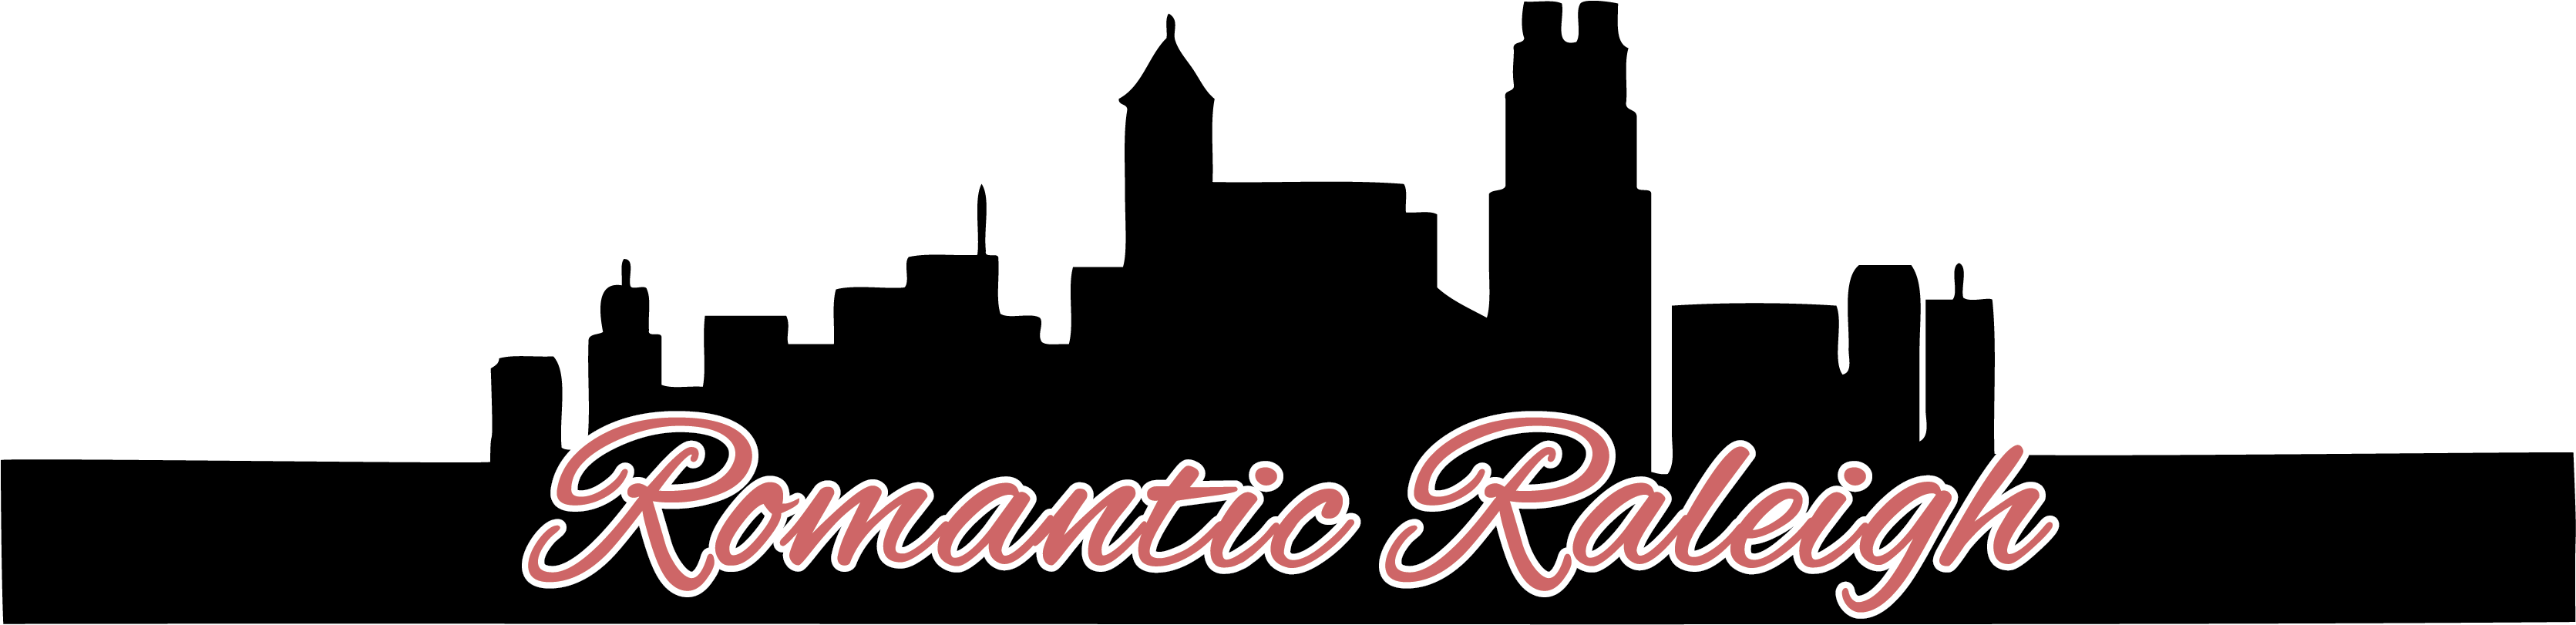 Romantic Raleigh - Romantic Raleigh (3341x868)